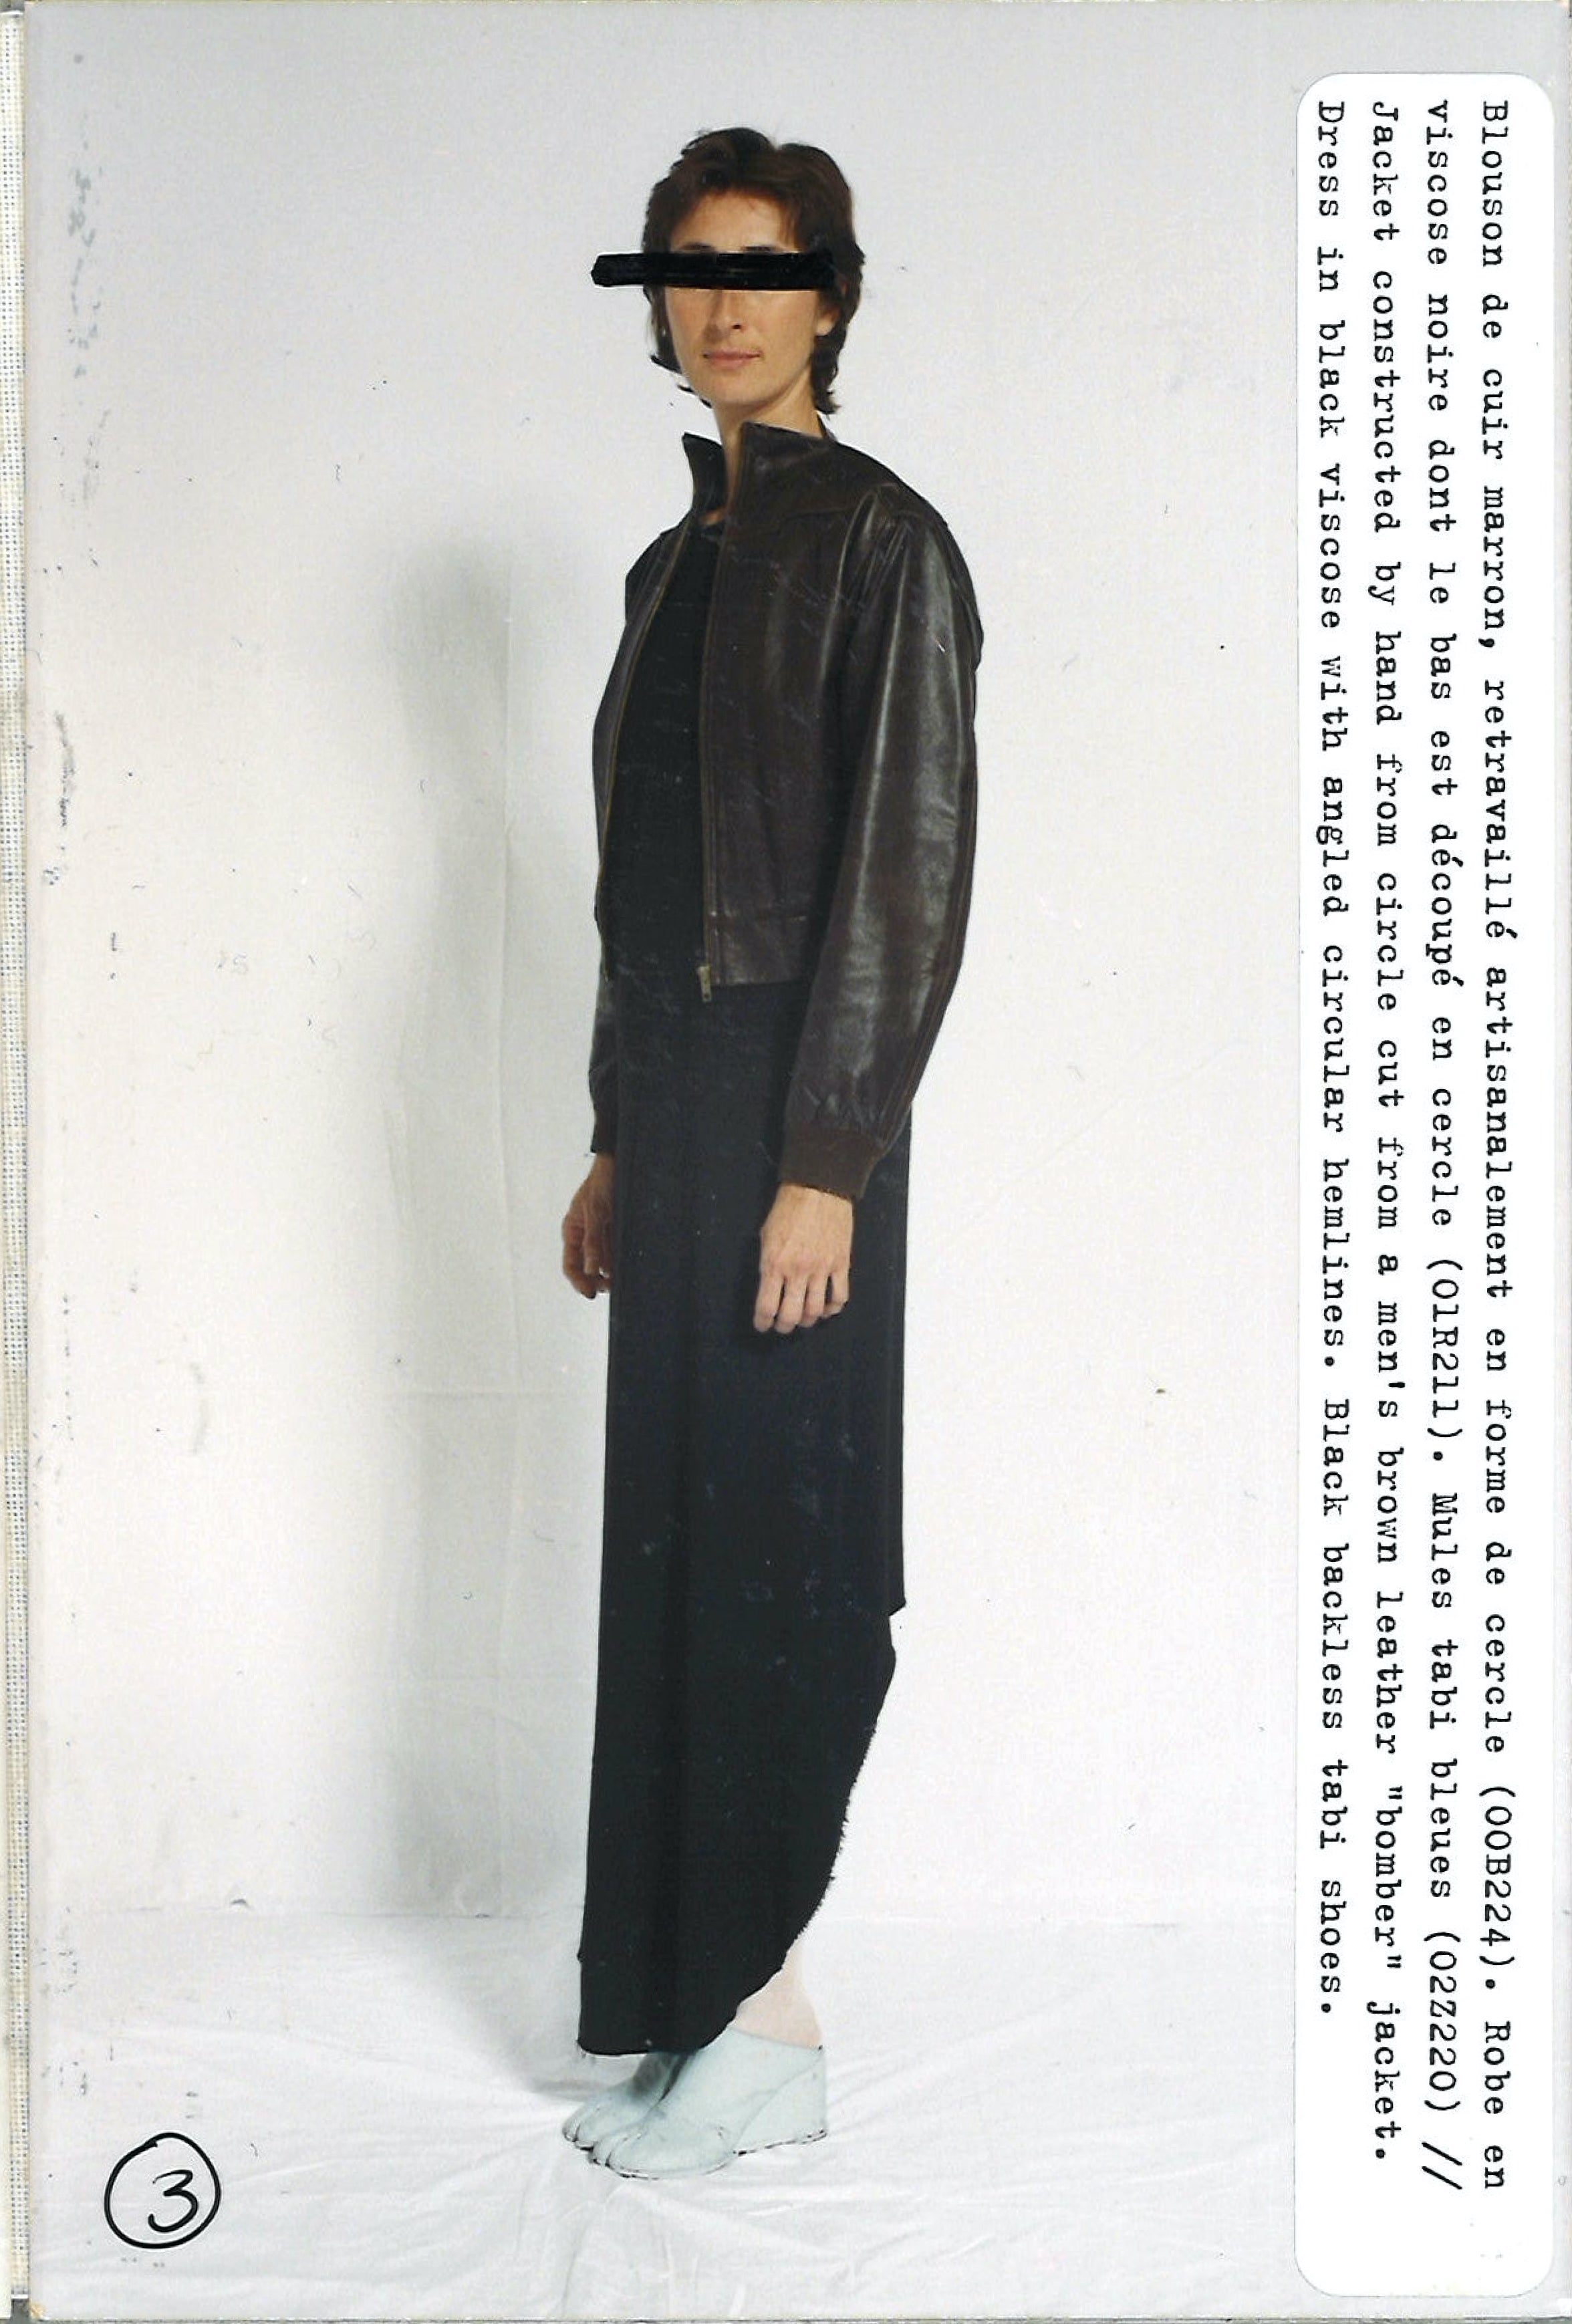 Maison Martin Margiela Lookbook
Womenswear Collection Spring/Summer 2002